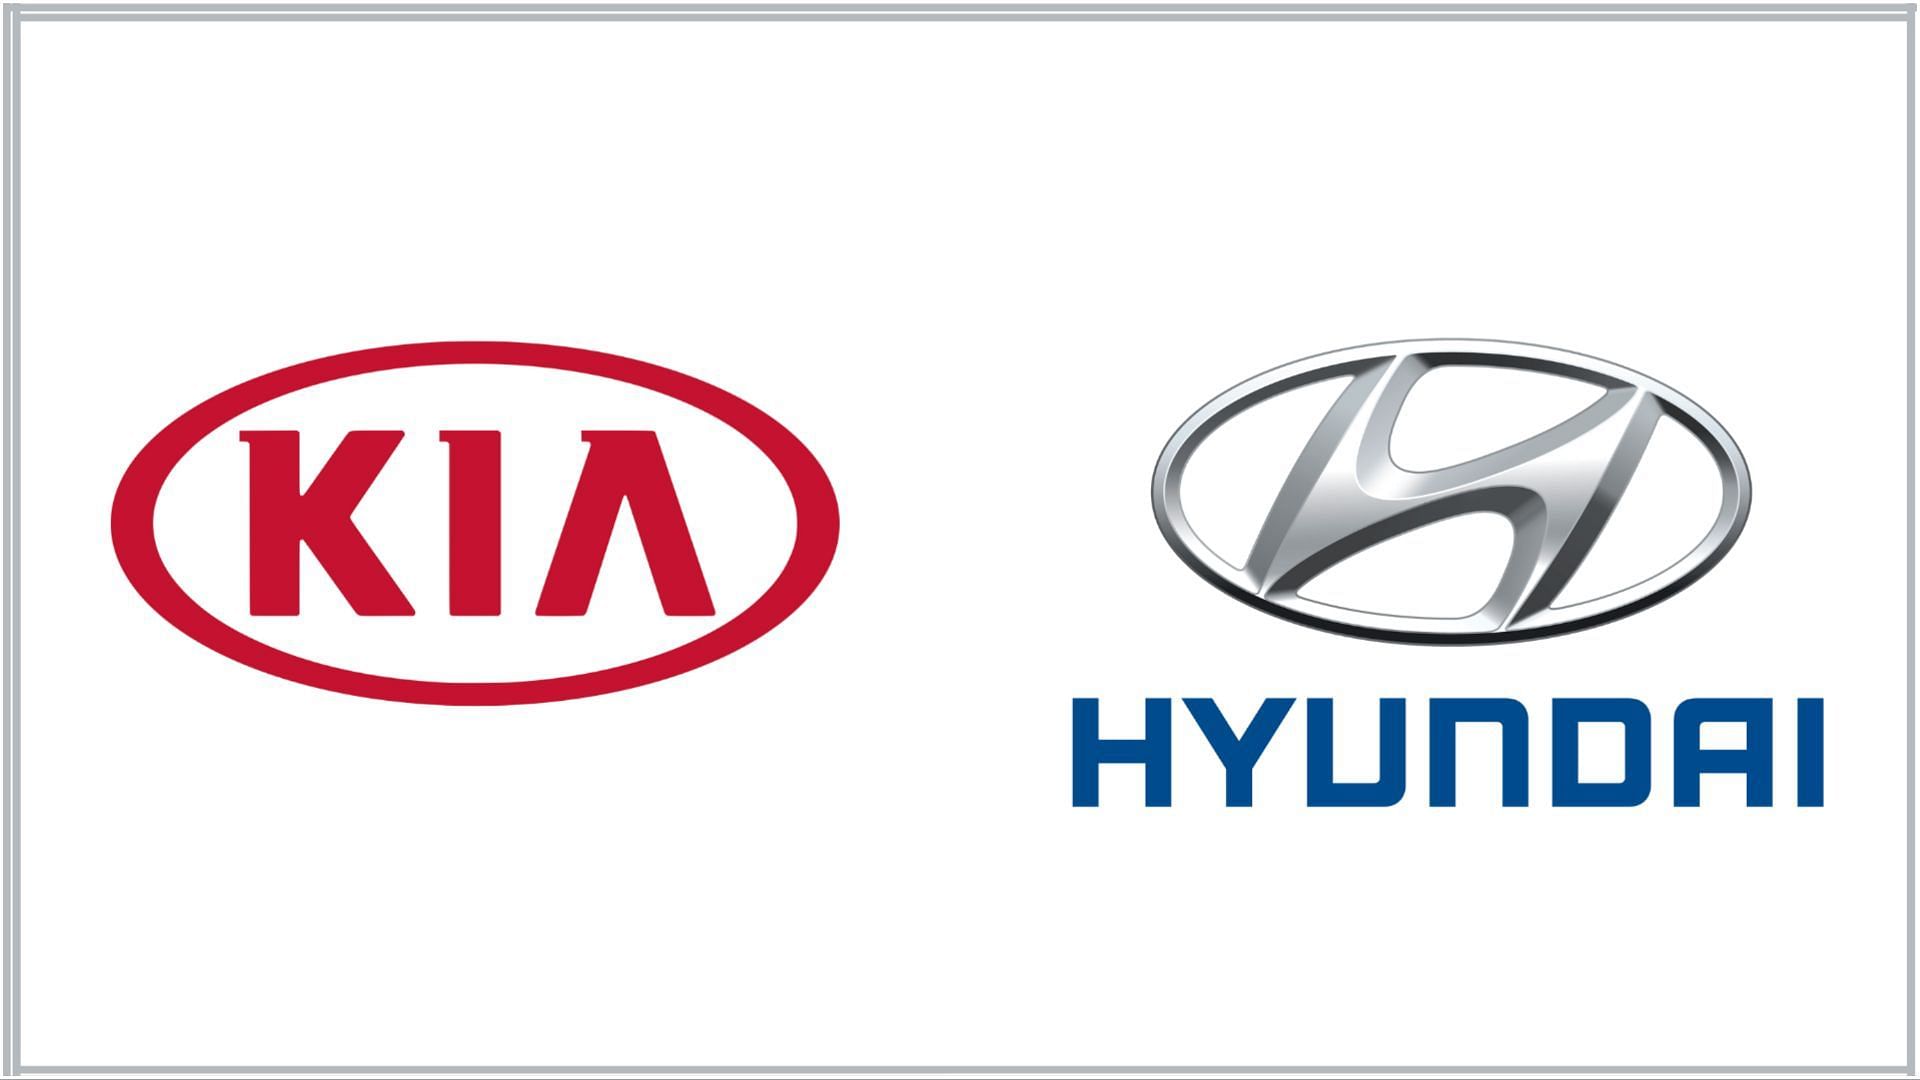 Over 571,000 Hyundai Santa Fe and Kia Carnival vehicles are being recalled over fore hazard concerns (Image via Hyundai/Kia)